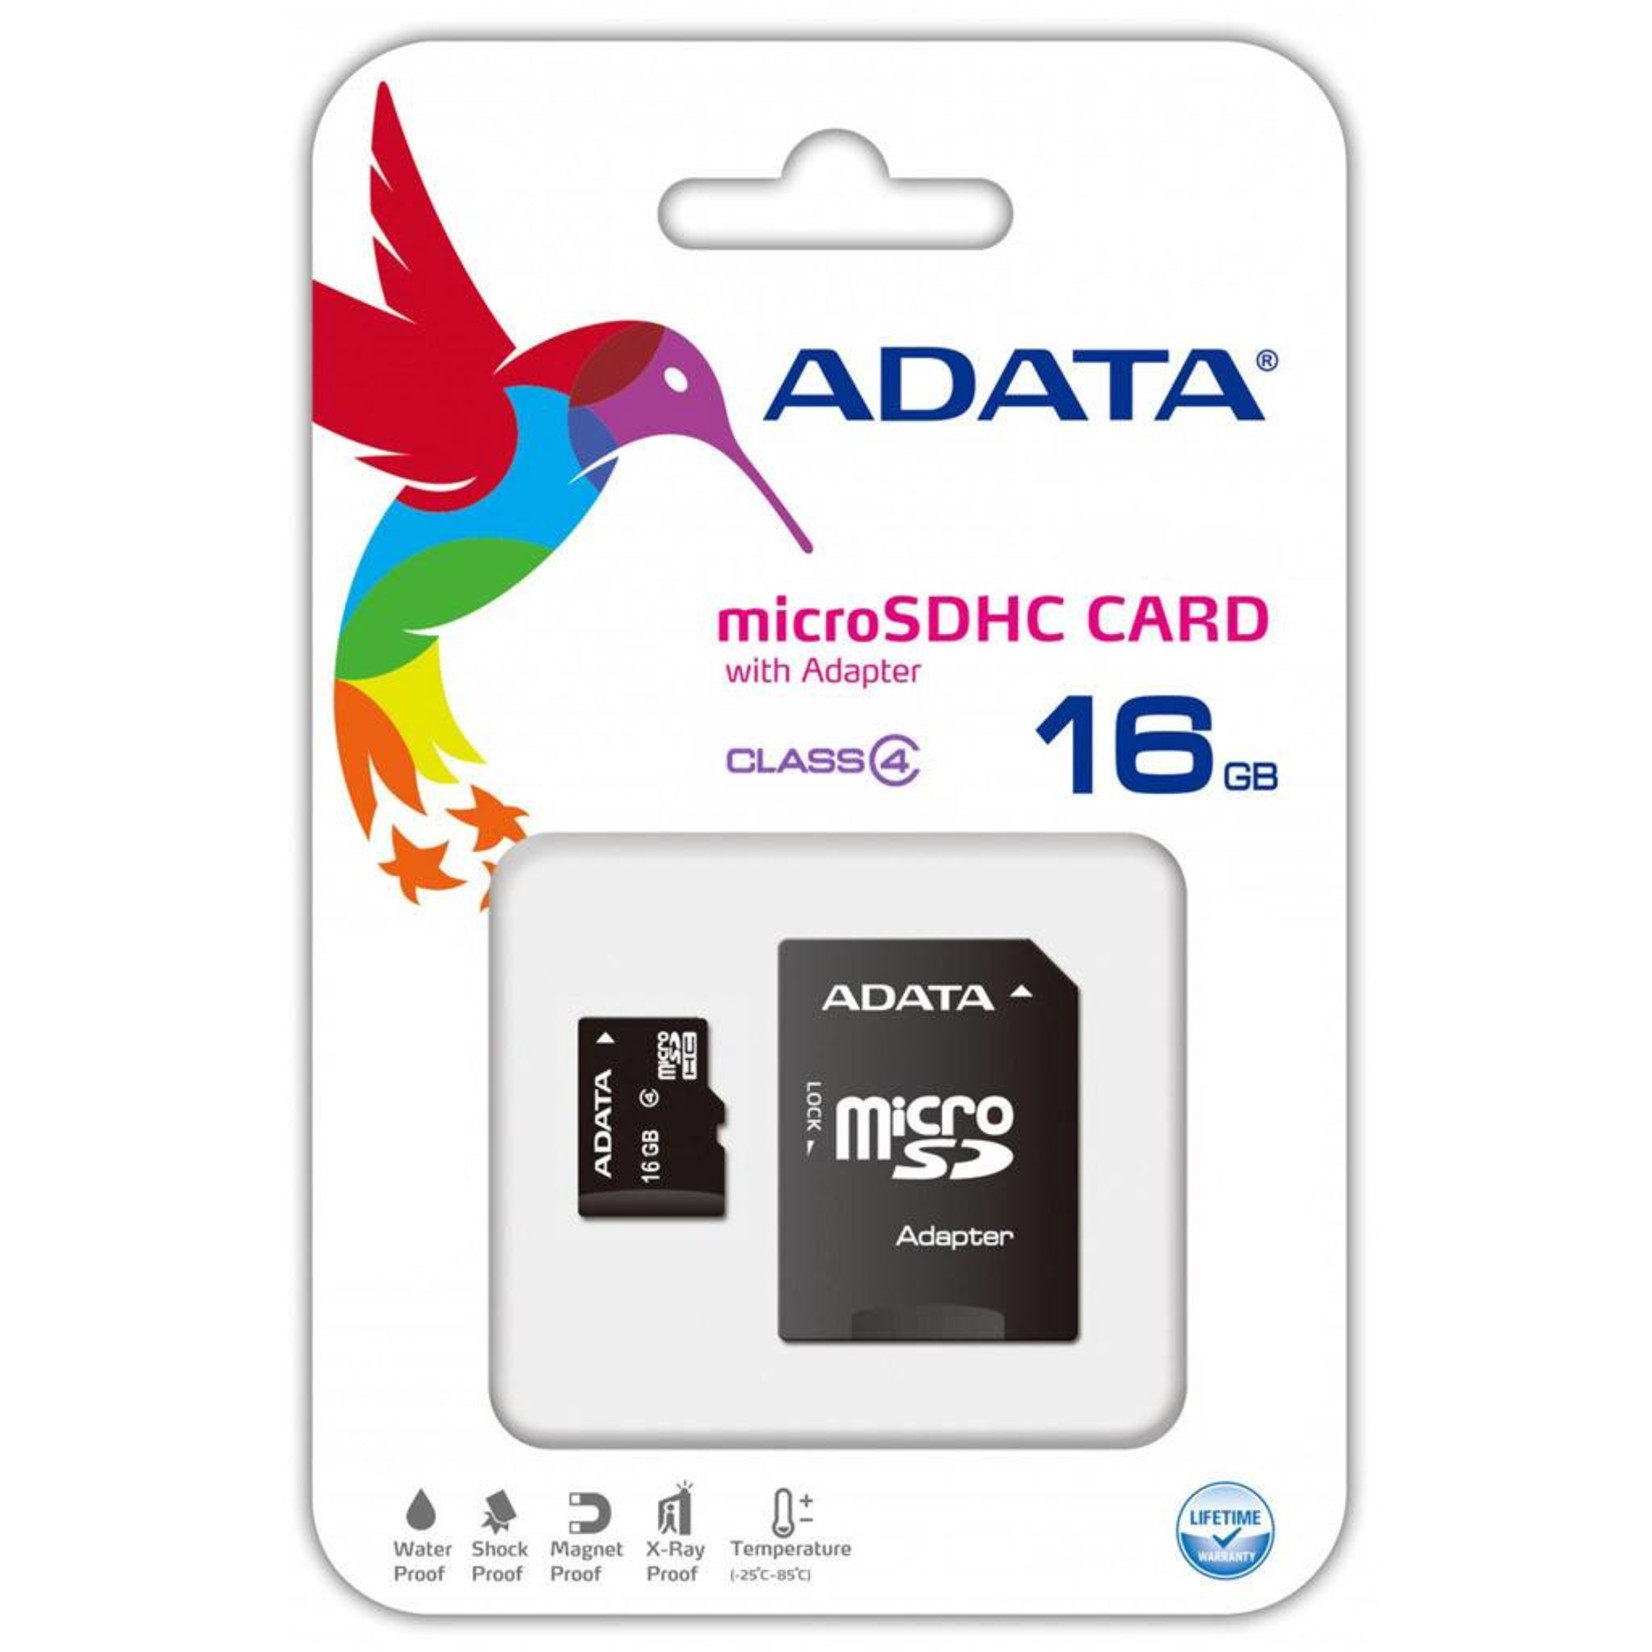 ADATA microSDHC Card with Adapter 16 GB Class 10